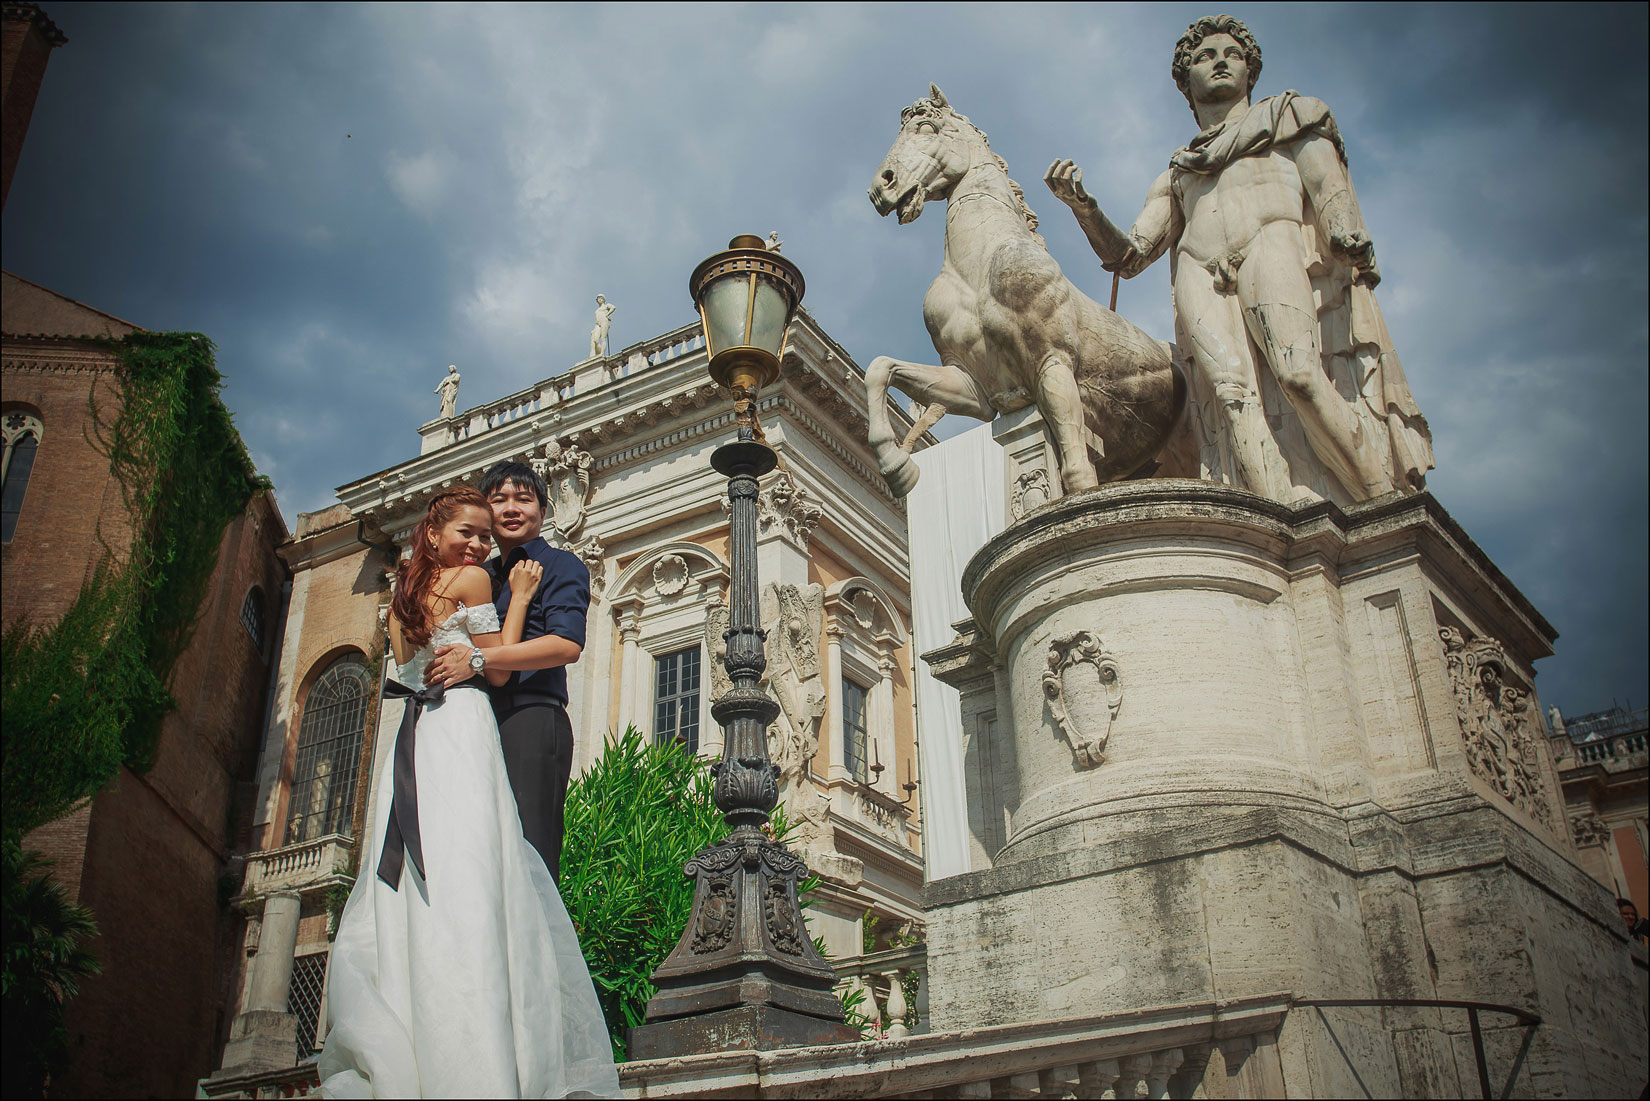 Rome pre wedding photographers / Hanna & Mark / portrait session at the Capitaline Hill